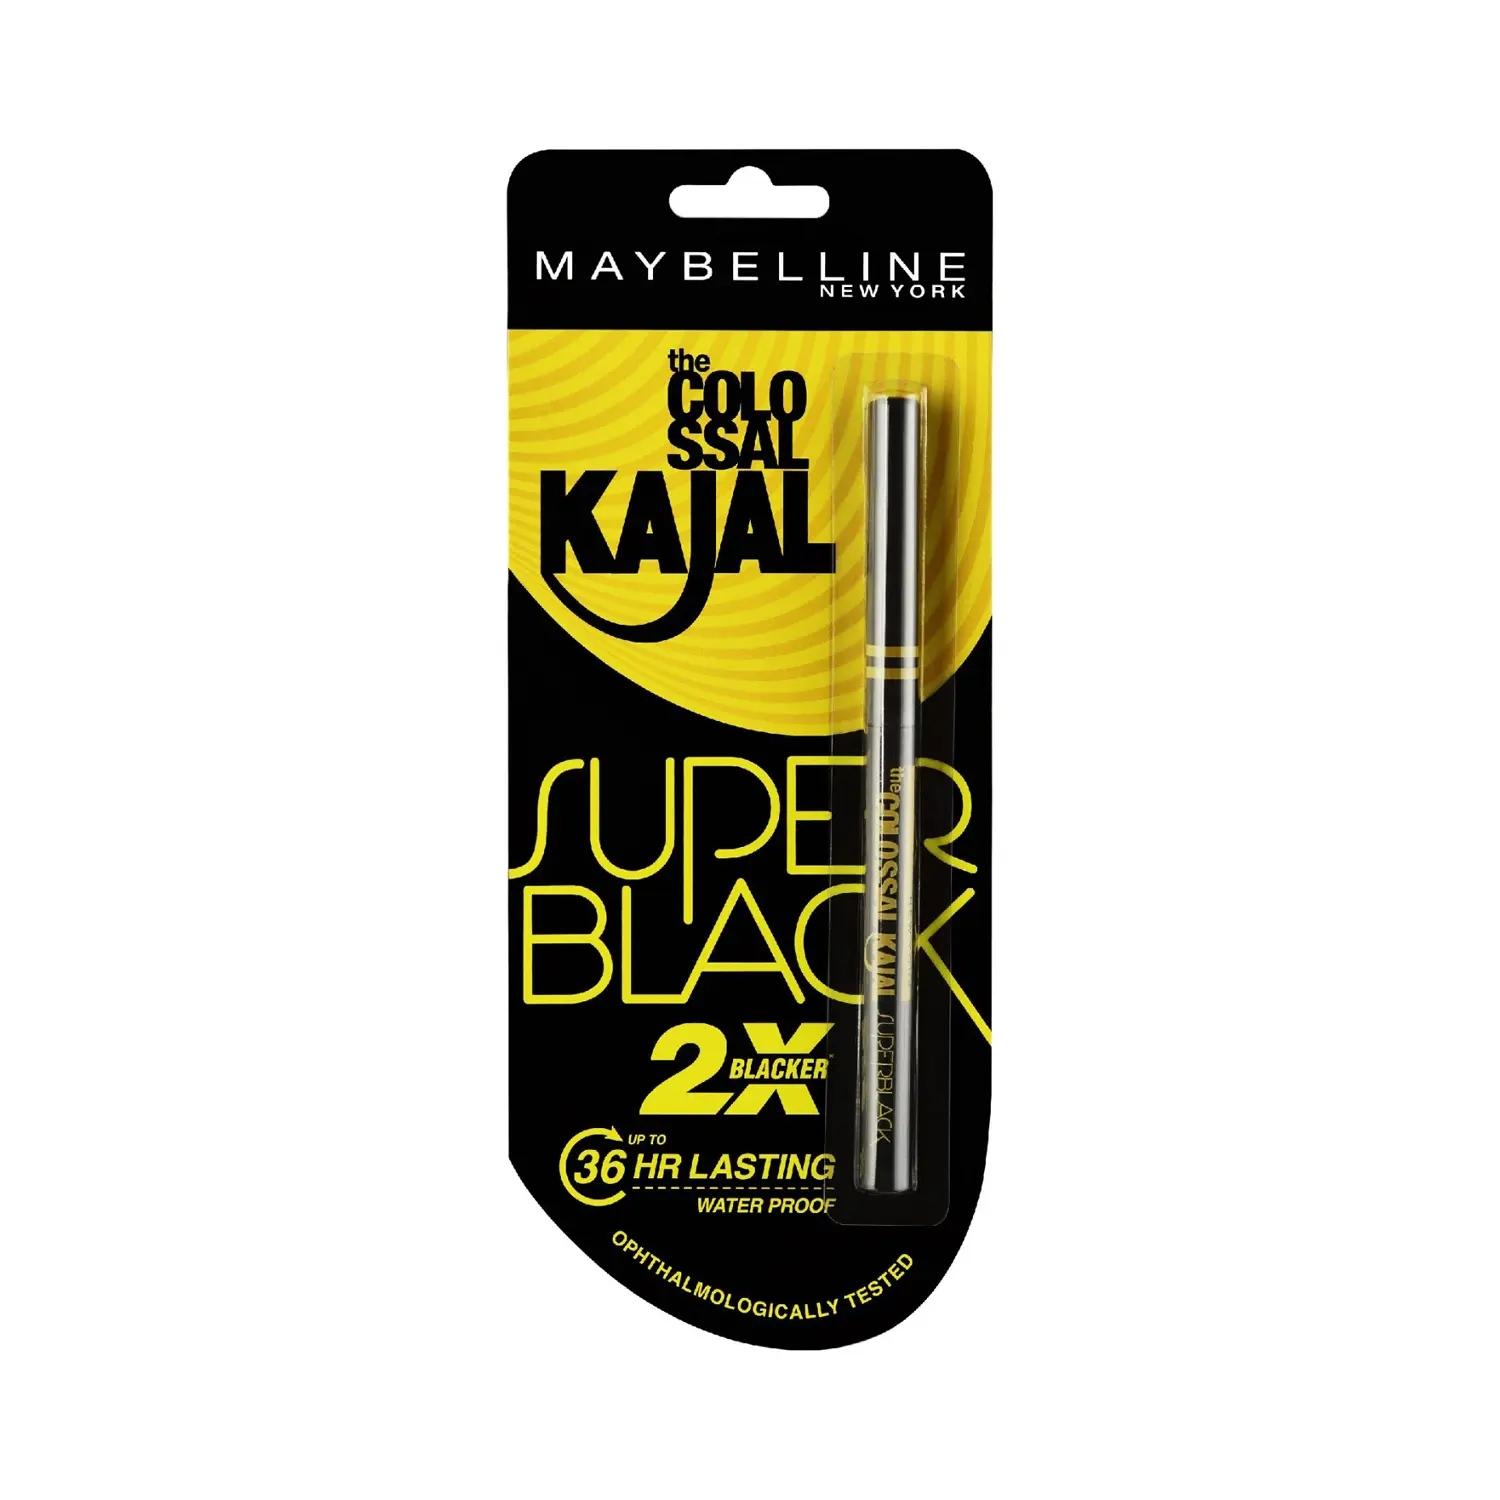 maybelline new york colossal kajal - super black (0.35g)